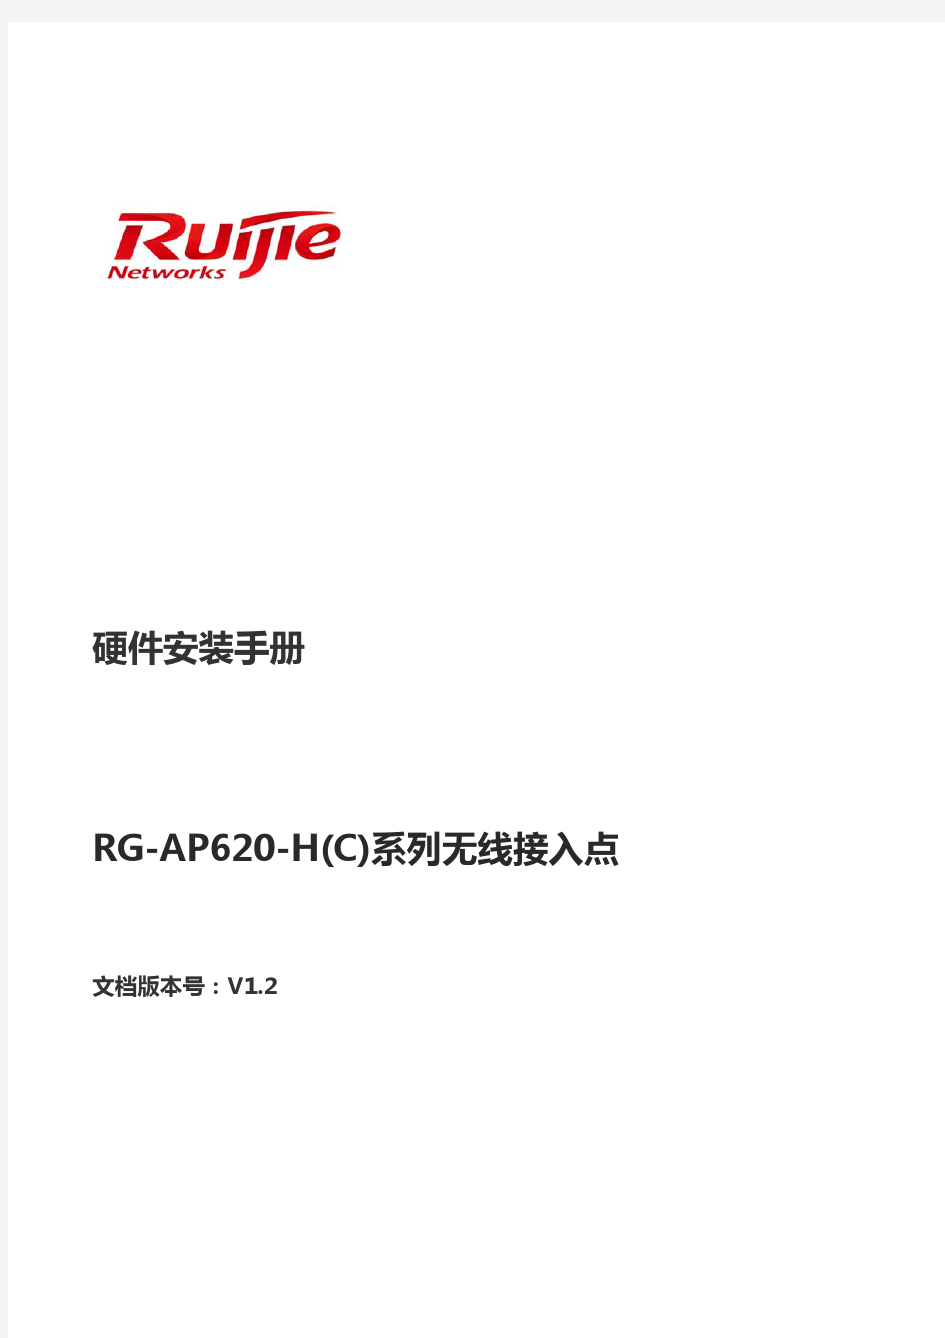 RG-AP620-H(C)系列无线接入点硬件安装手册(V1.2)